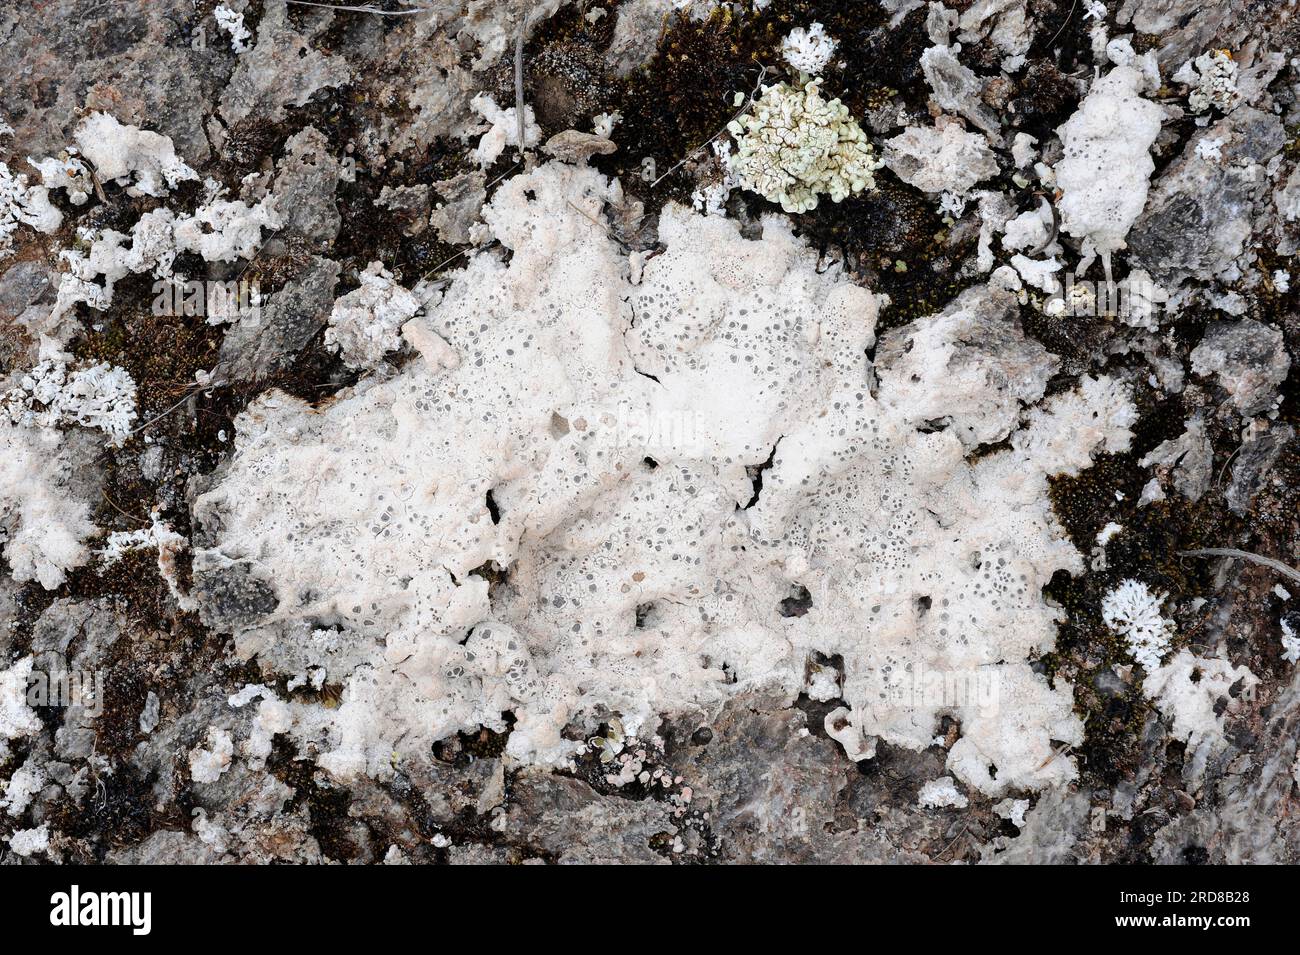 Crater lichen (Diploschistes ocellatus) is a crustose lichen with white or grey thallus and black apothecia. Fungi. Ascomycota. Thelotremataceae. This Stock Photo